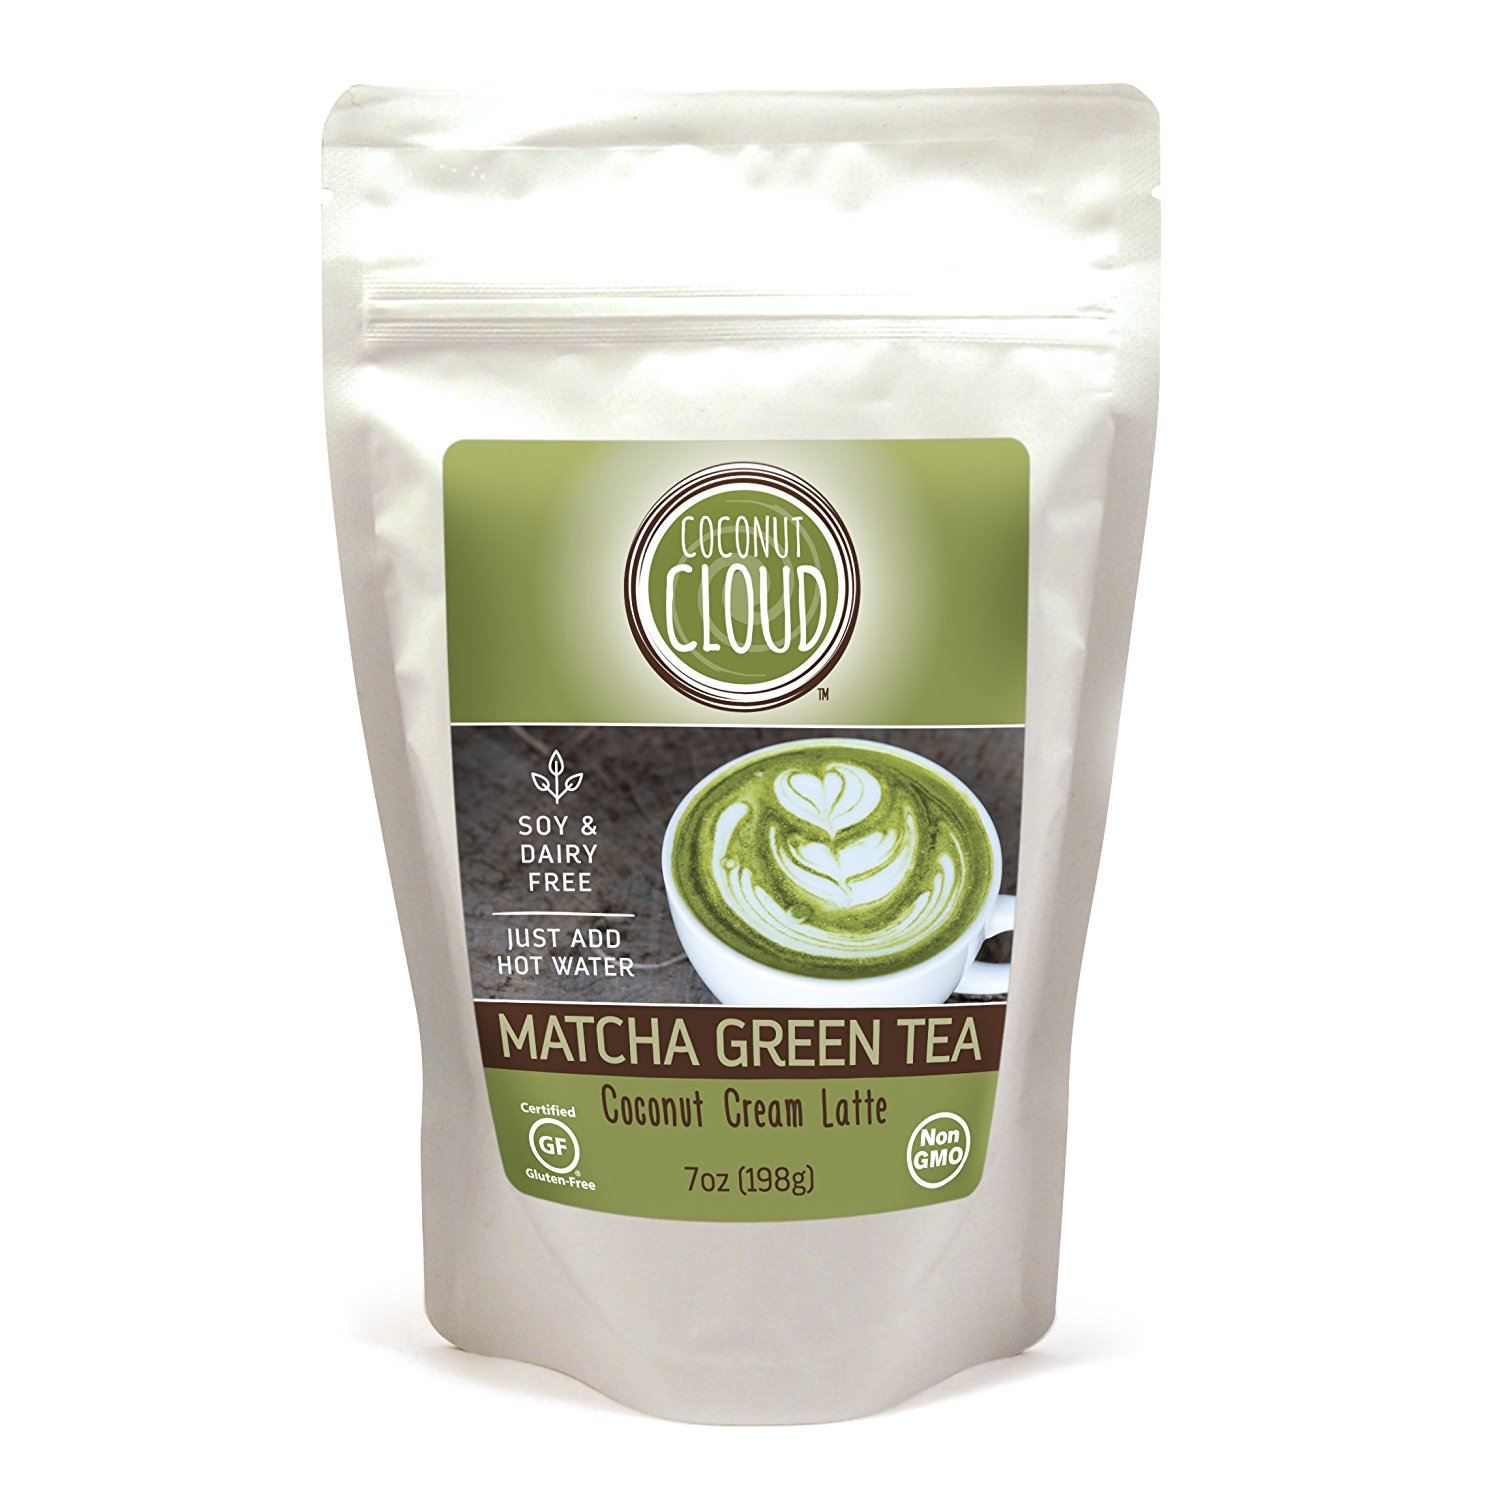 Coconut Cloud Matcha Green Tea Coconut Cream Latte free image download